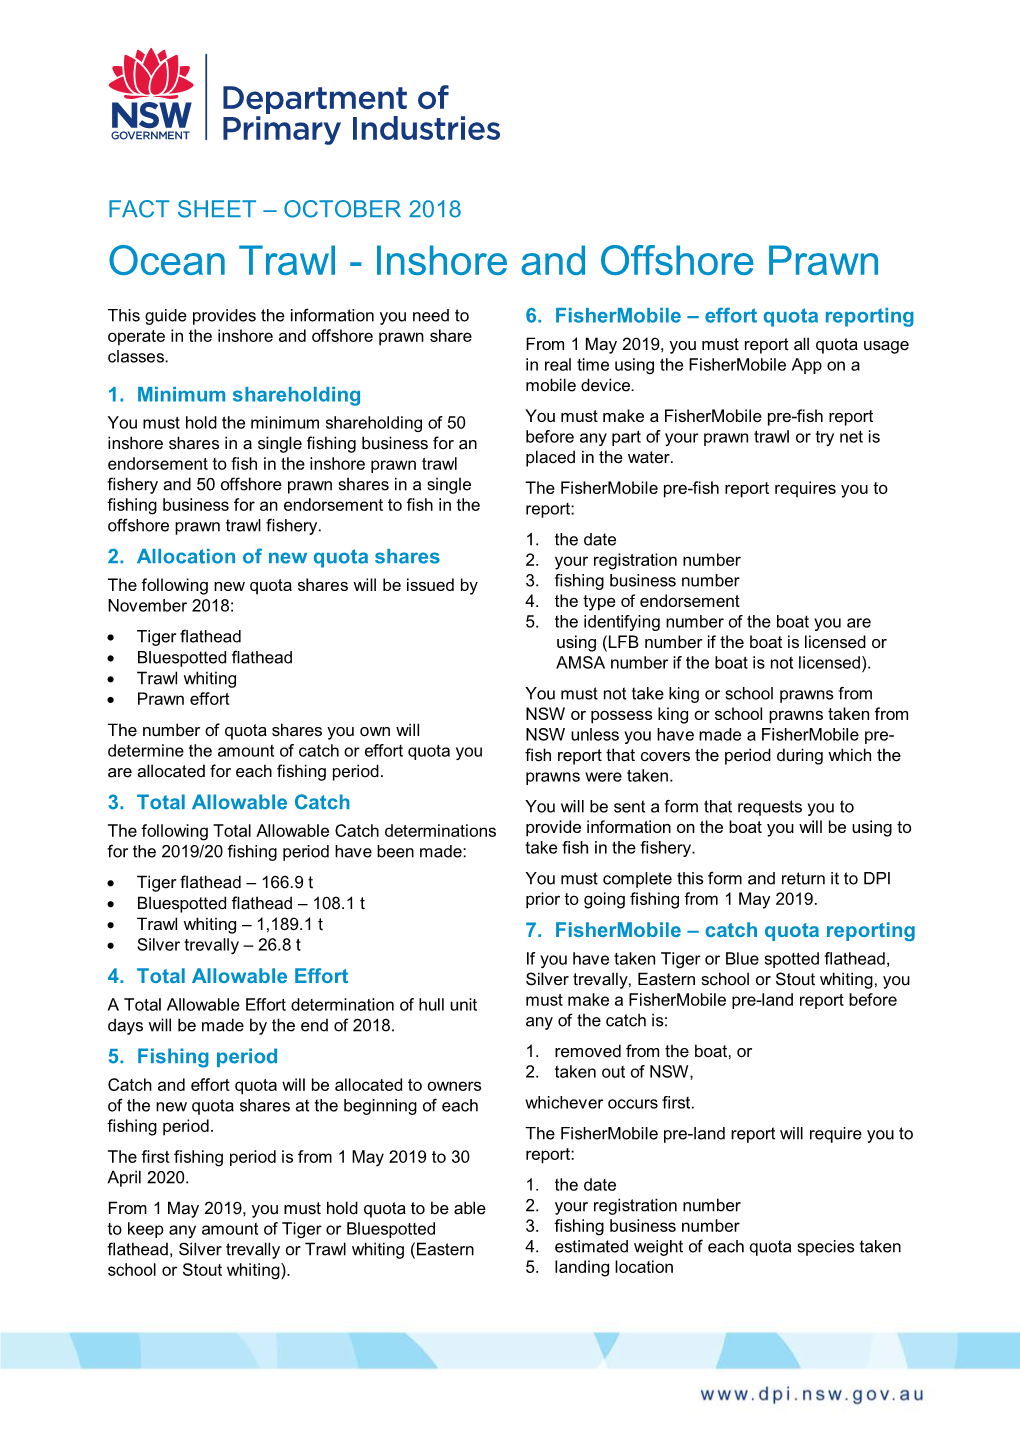 Ocean Trawl - Inshore and Offshore Prawn